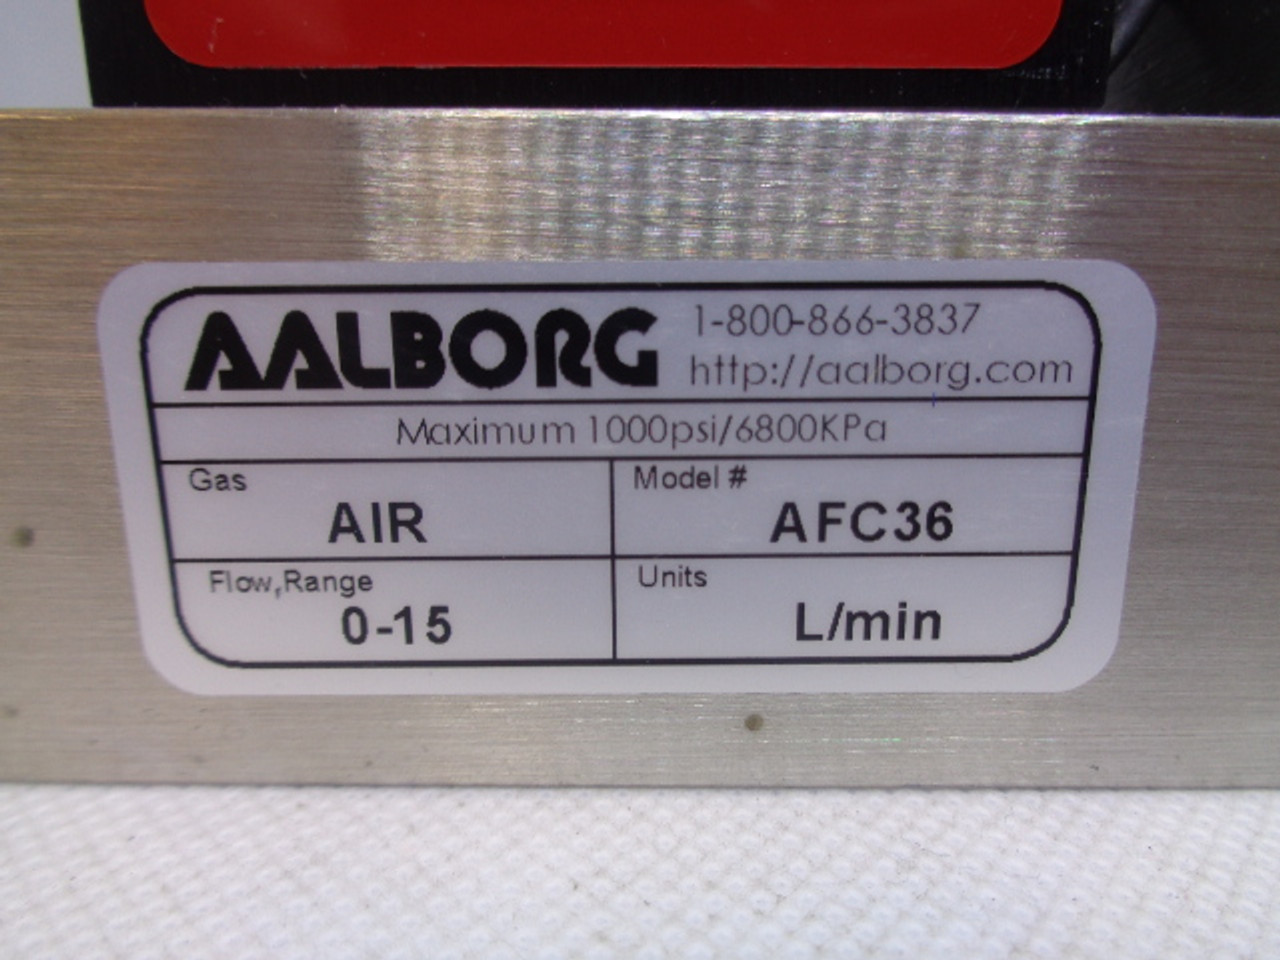 AALBORG AFC3600 Mass Flow Controller, AIR, 0-15 Range, L/min